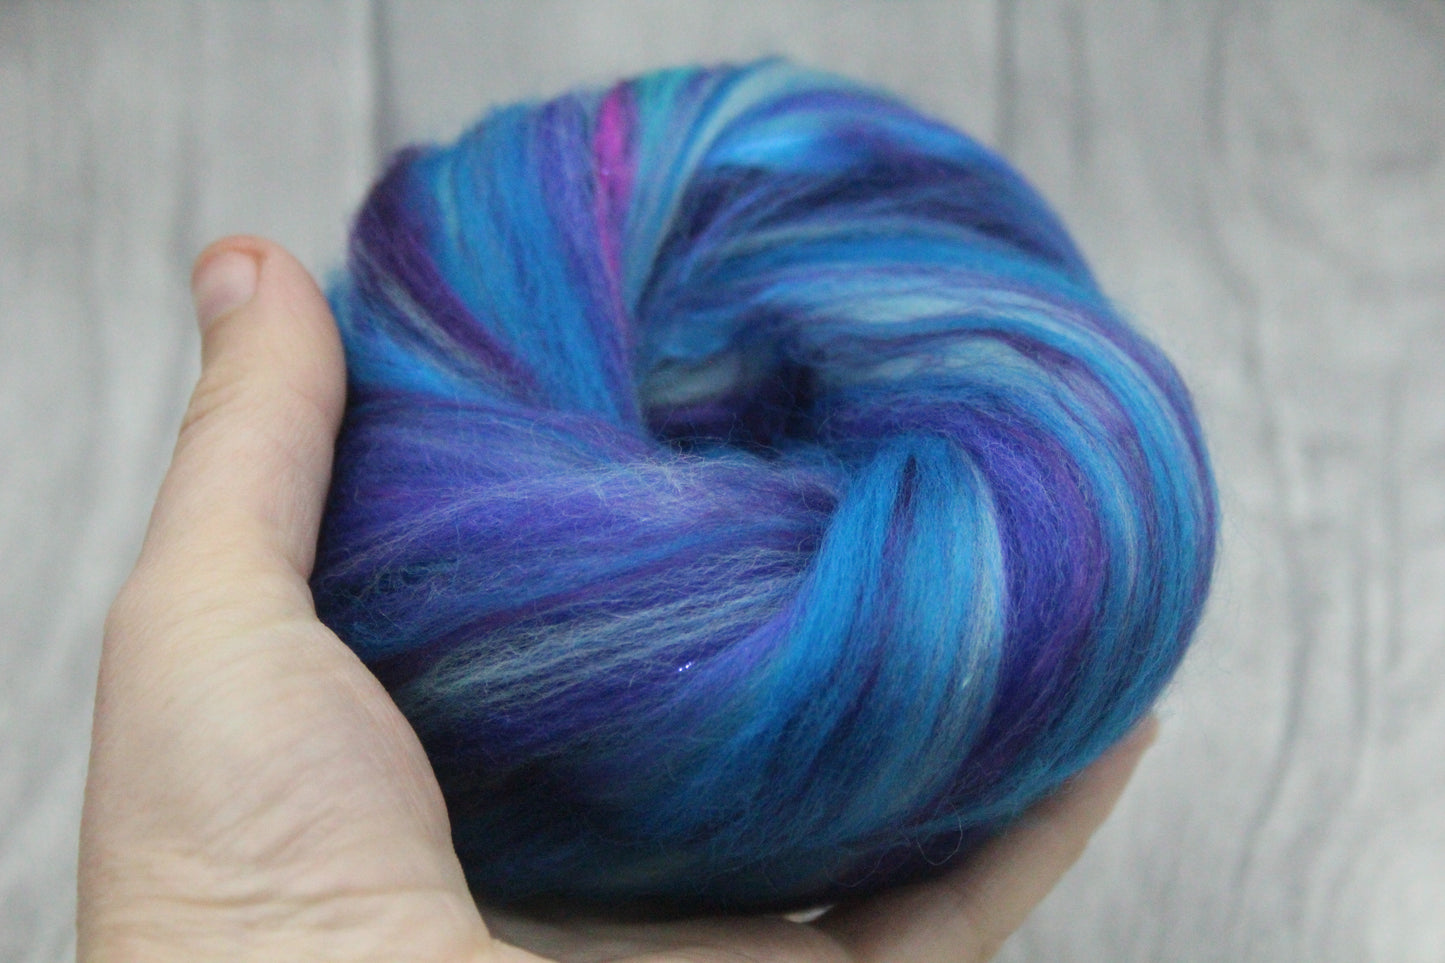 Wool Blend - Blue Purple  - 13 grams / 0.4 oz  - Fibre for felting, weaving or spinning